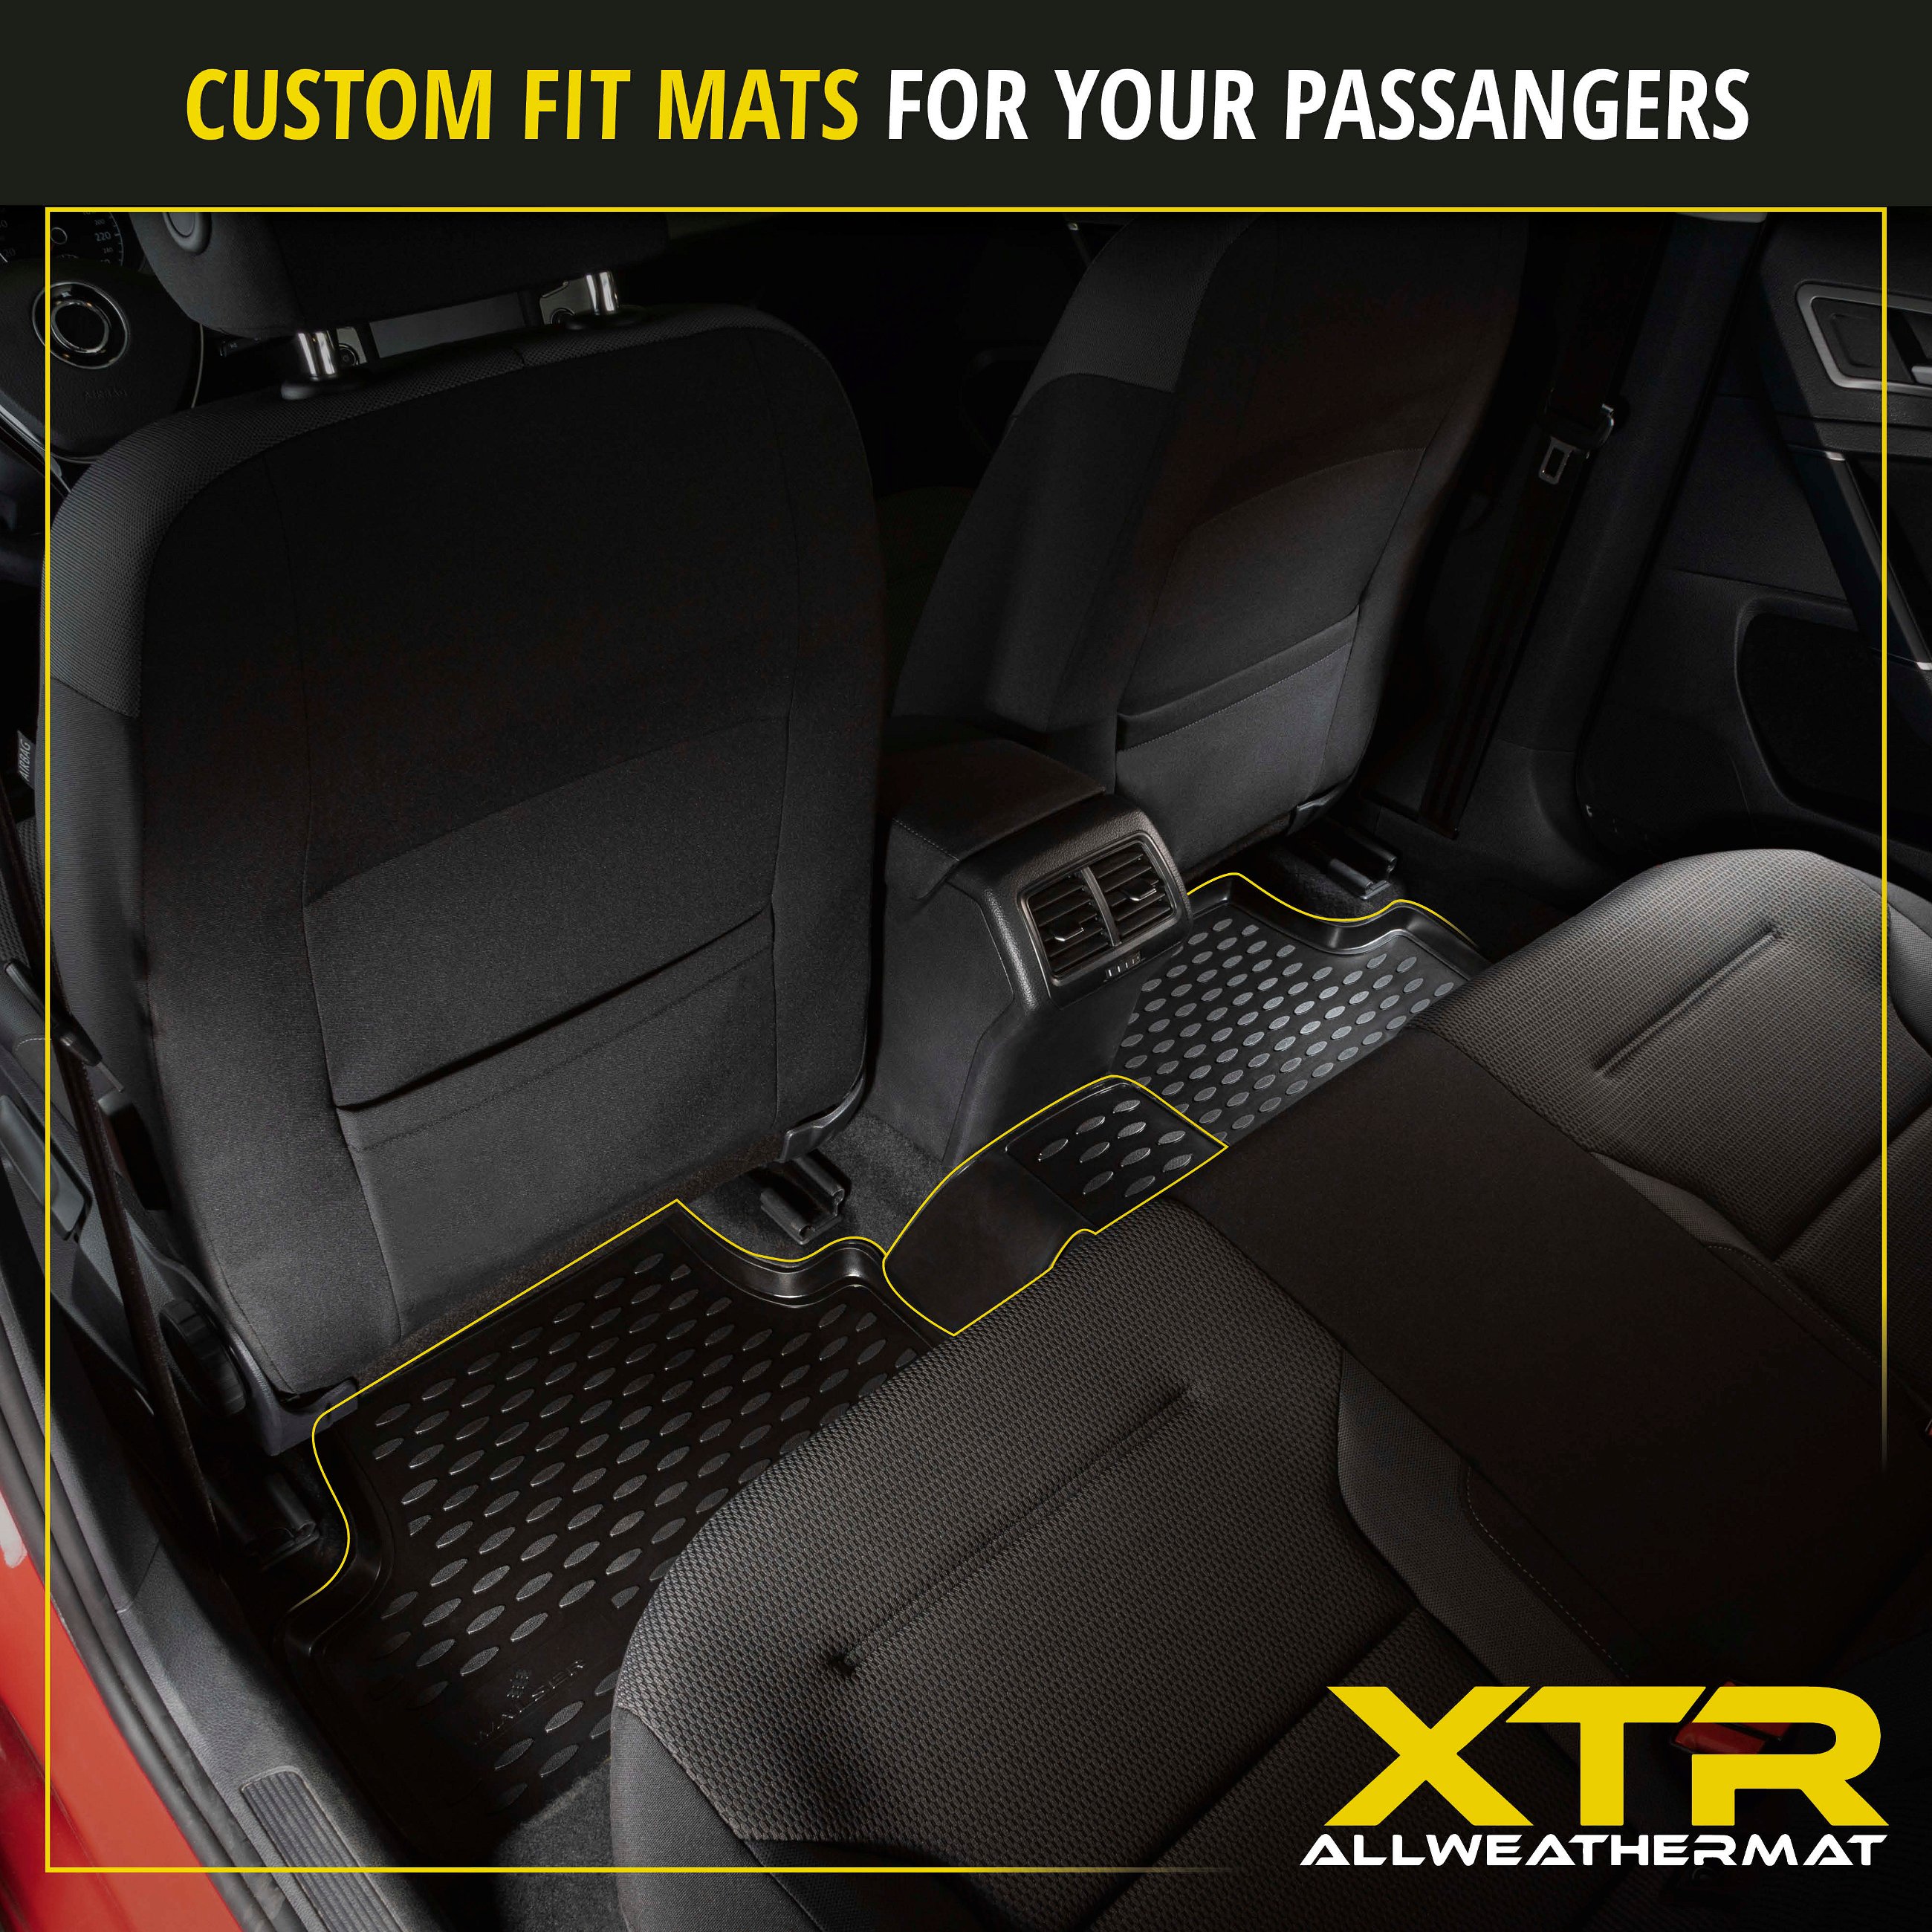 XTR Rubber Mats for Toyota Corolla Sedan 06/2013 - 08/2019